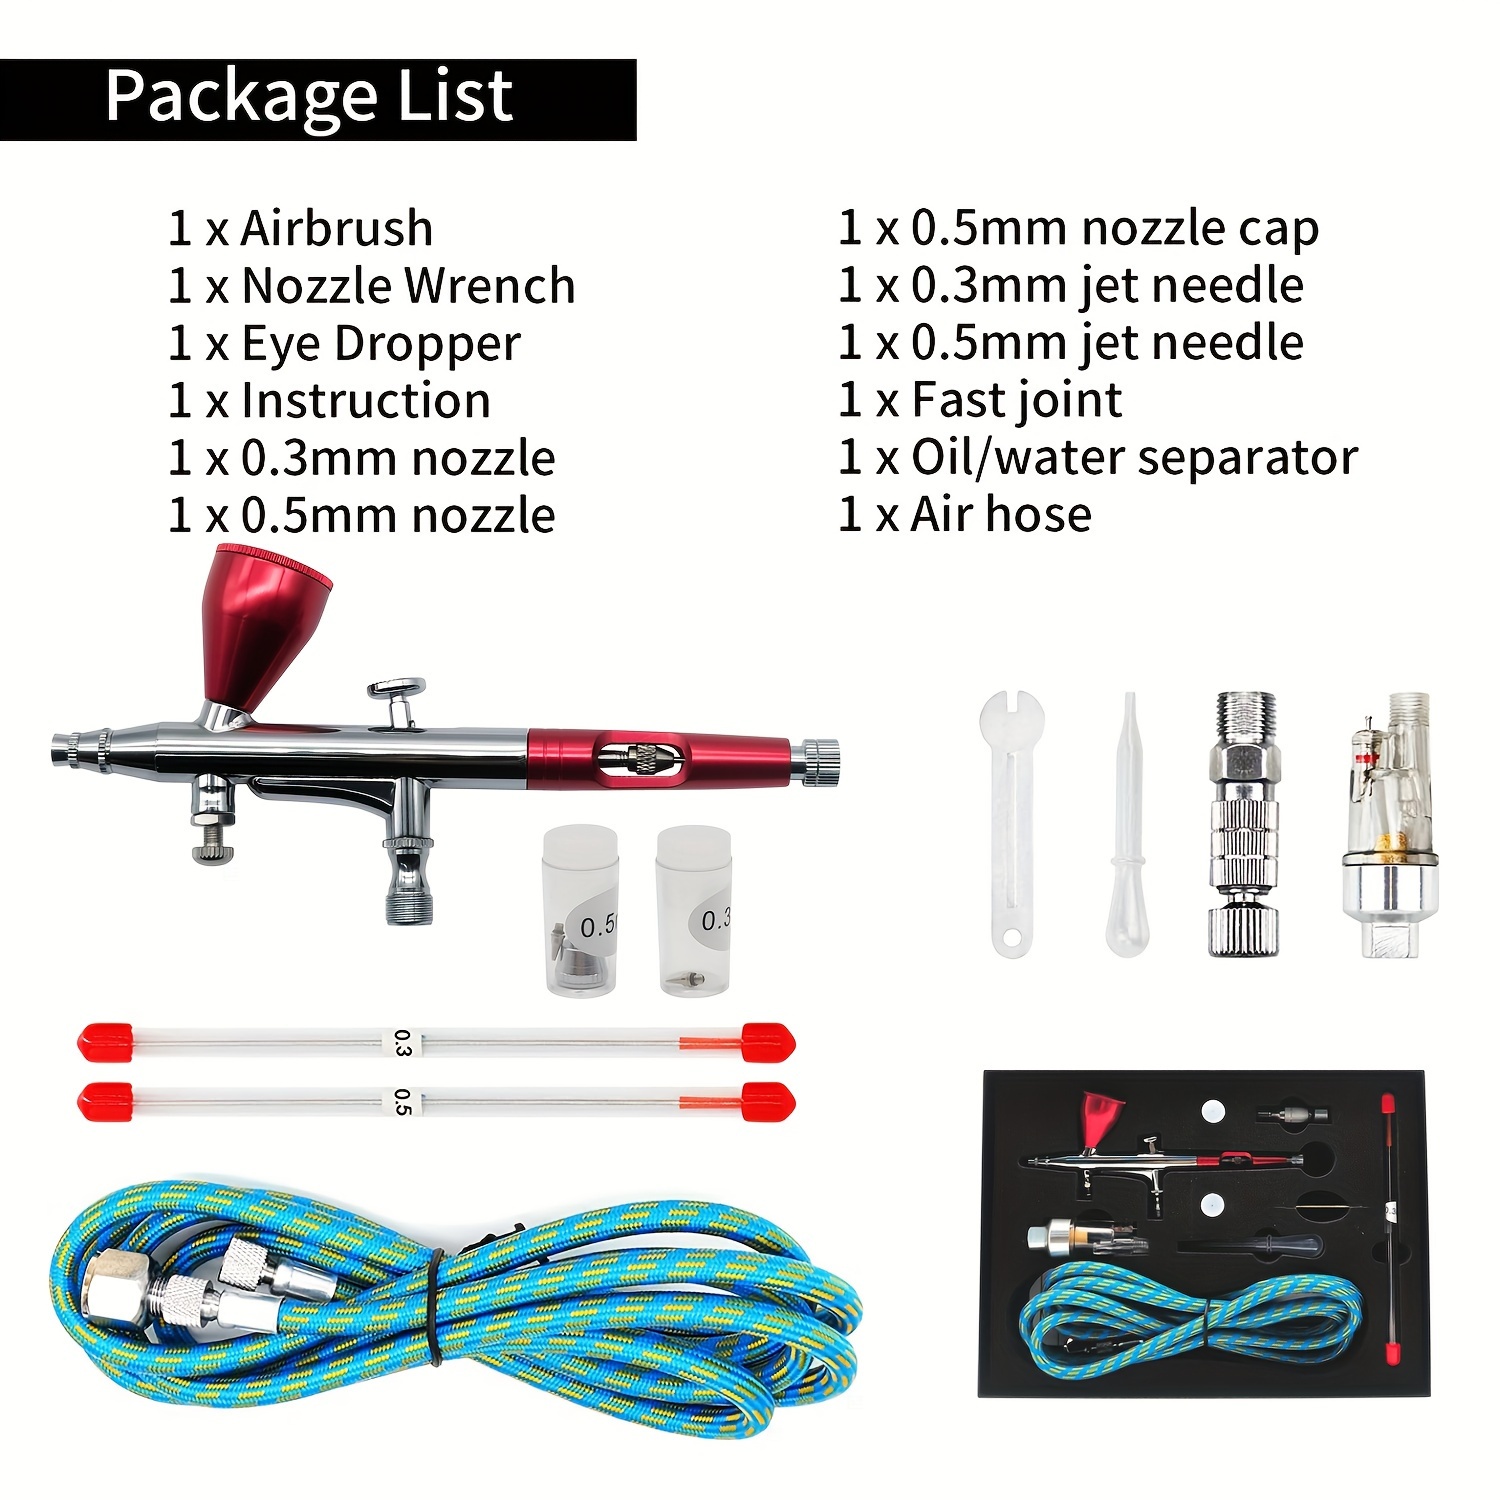 Dual-Action Airbrush, Airbrush Kits, 0.3mm Nozzle Airbrush